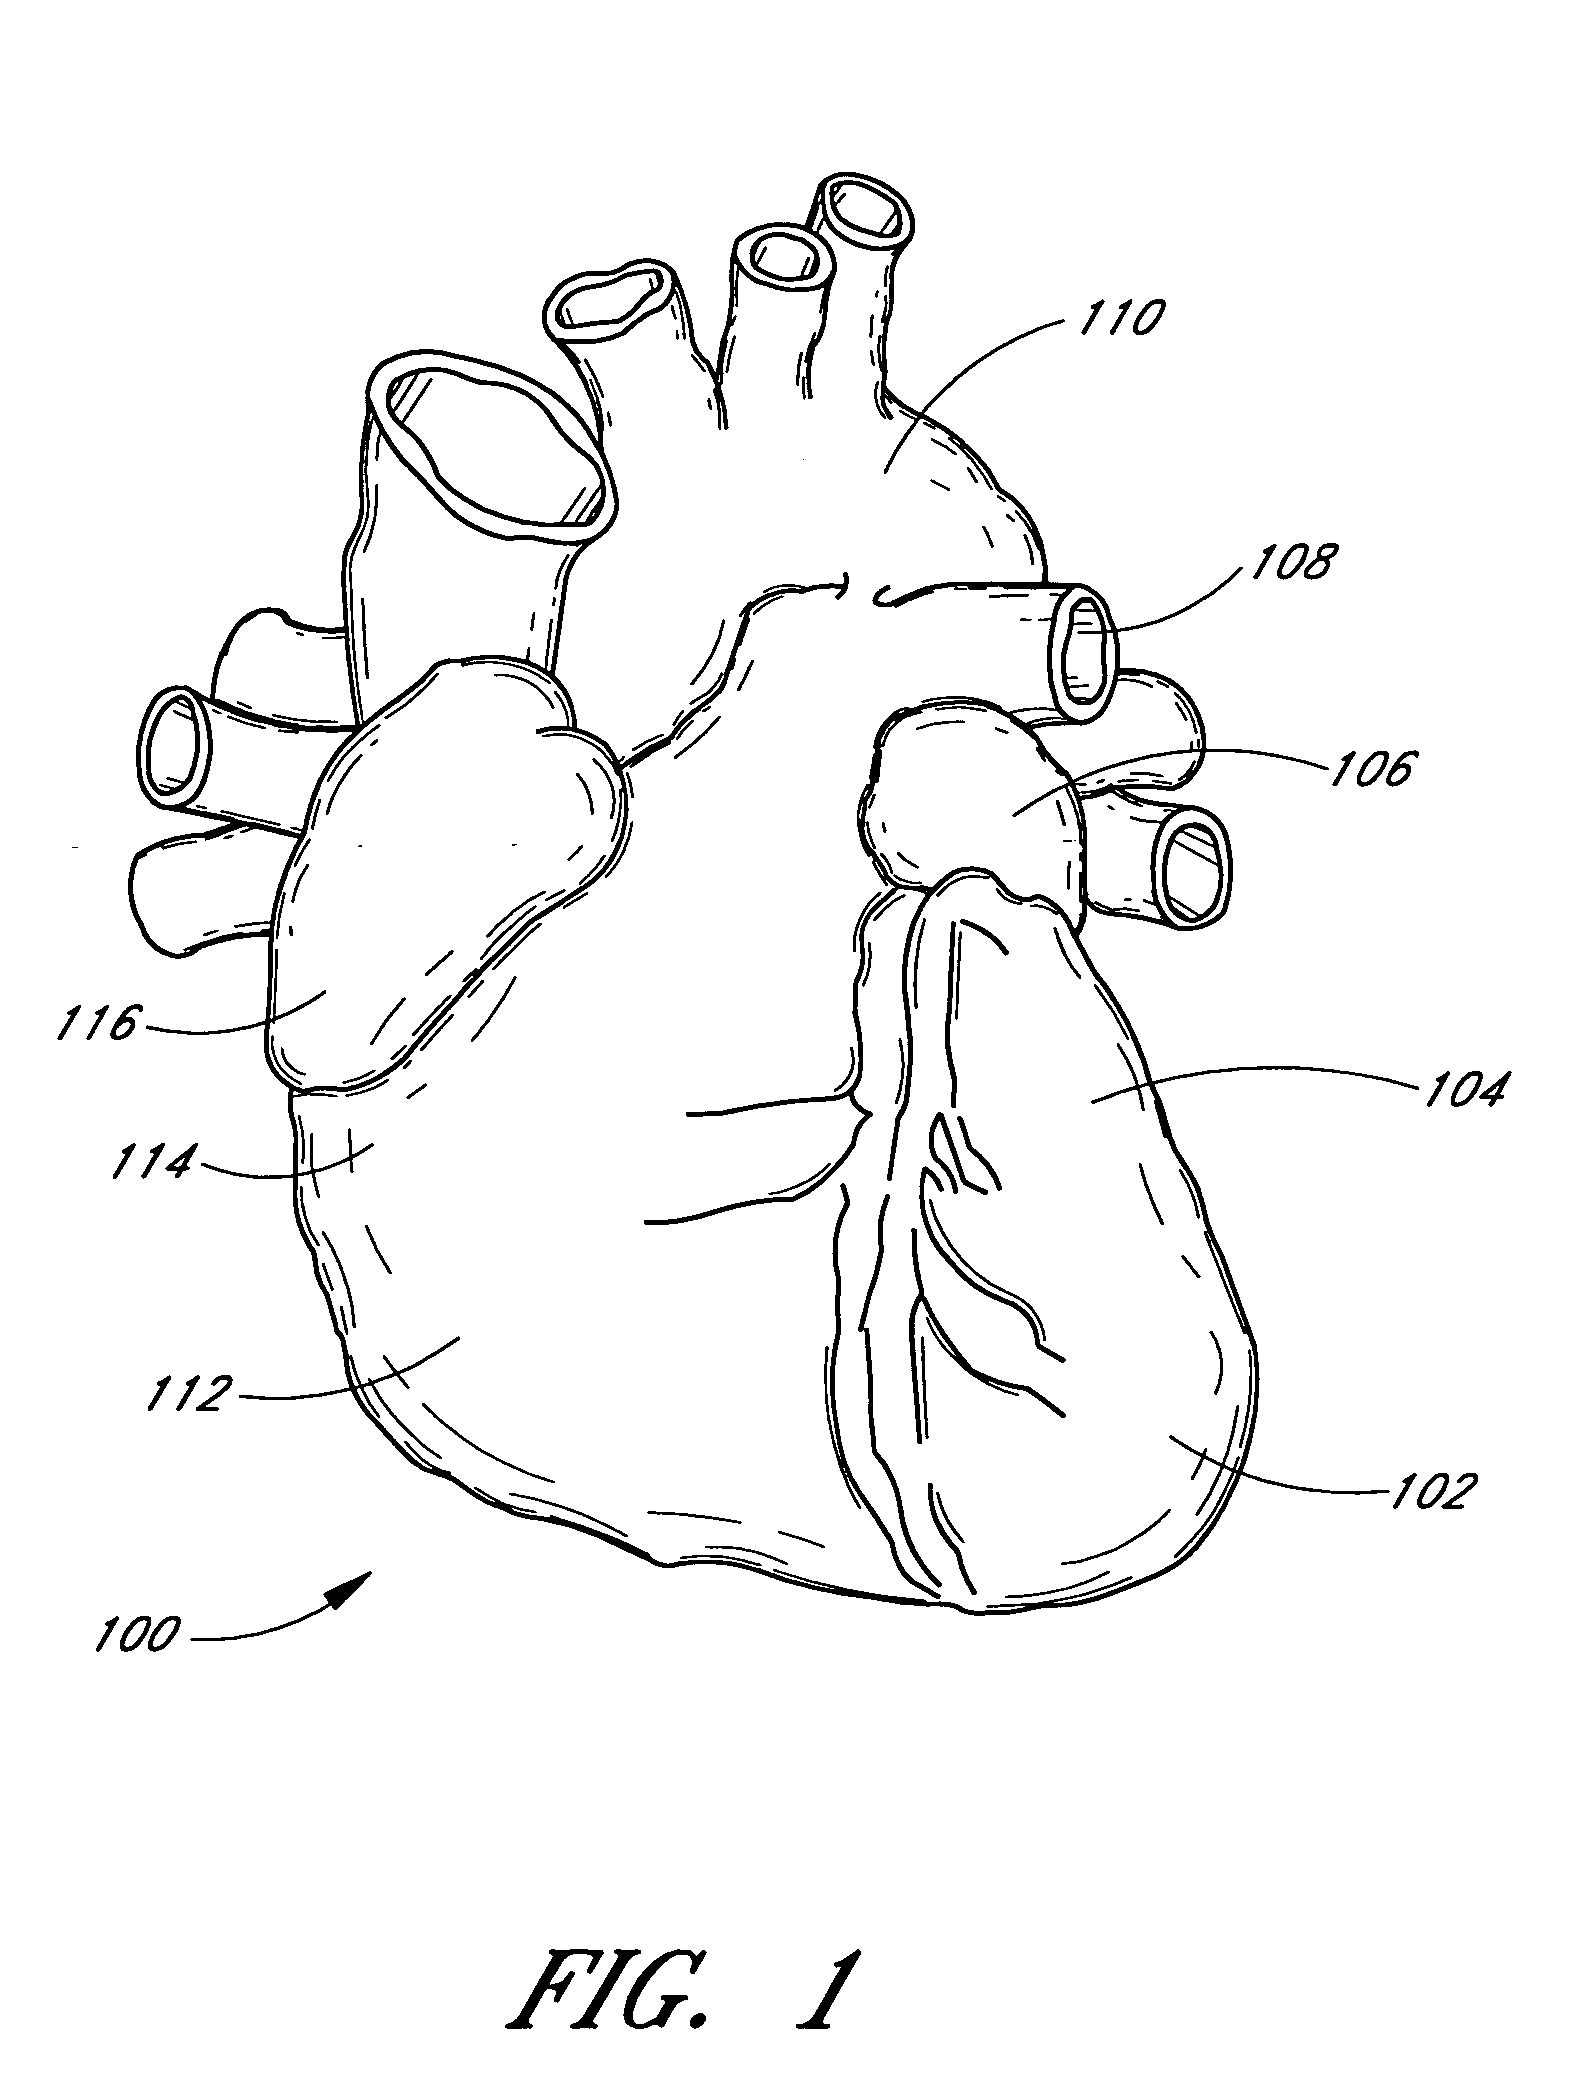 Patent foramen ovale closure system